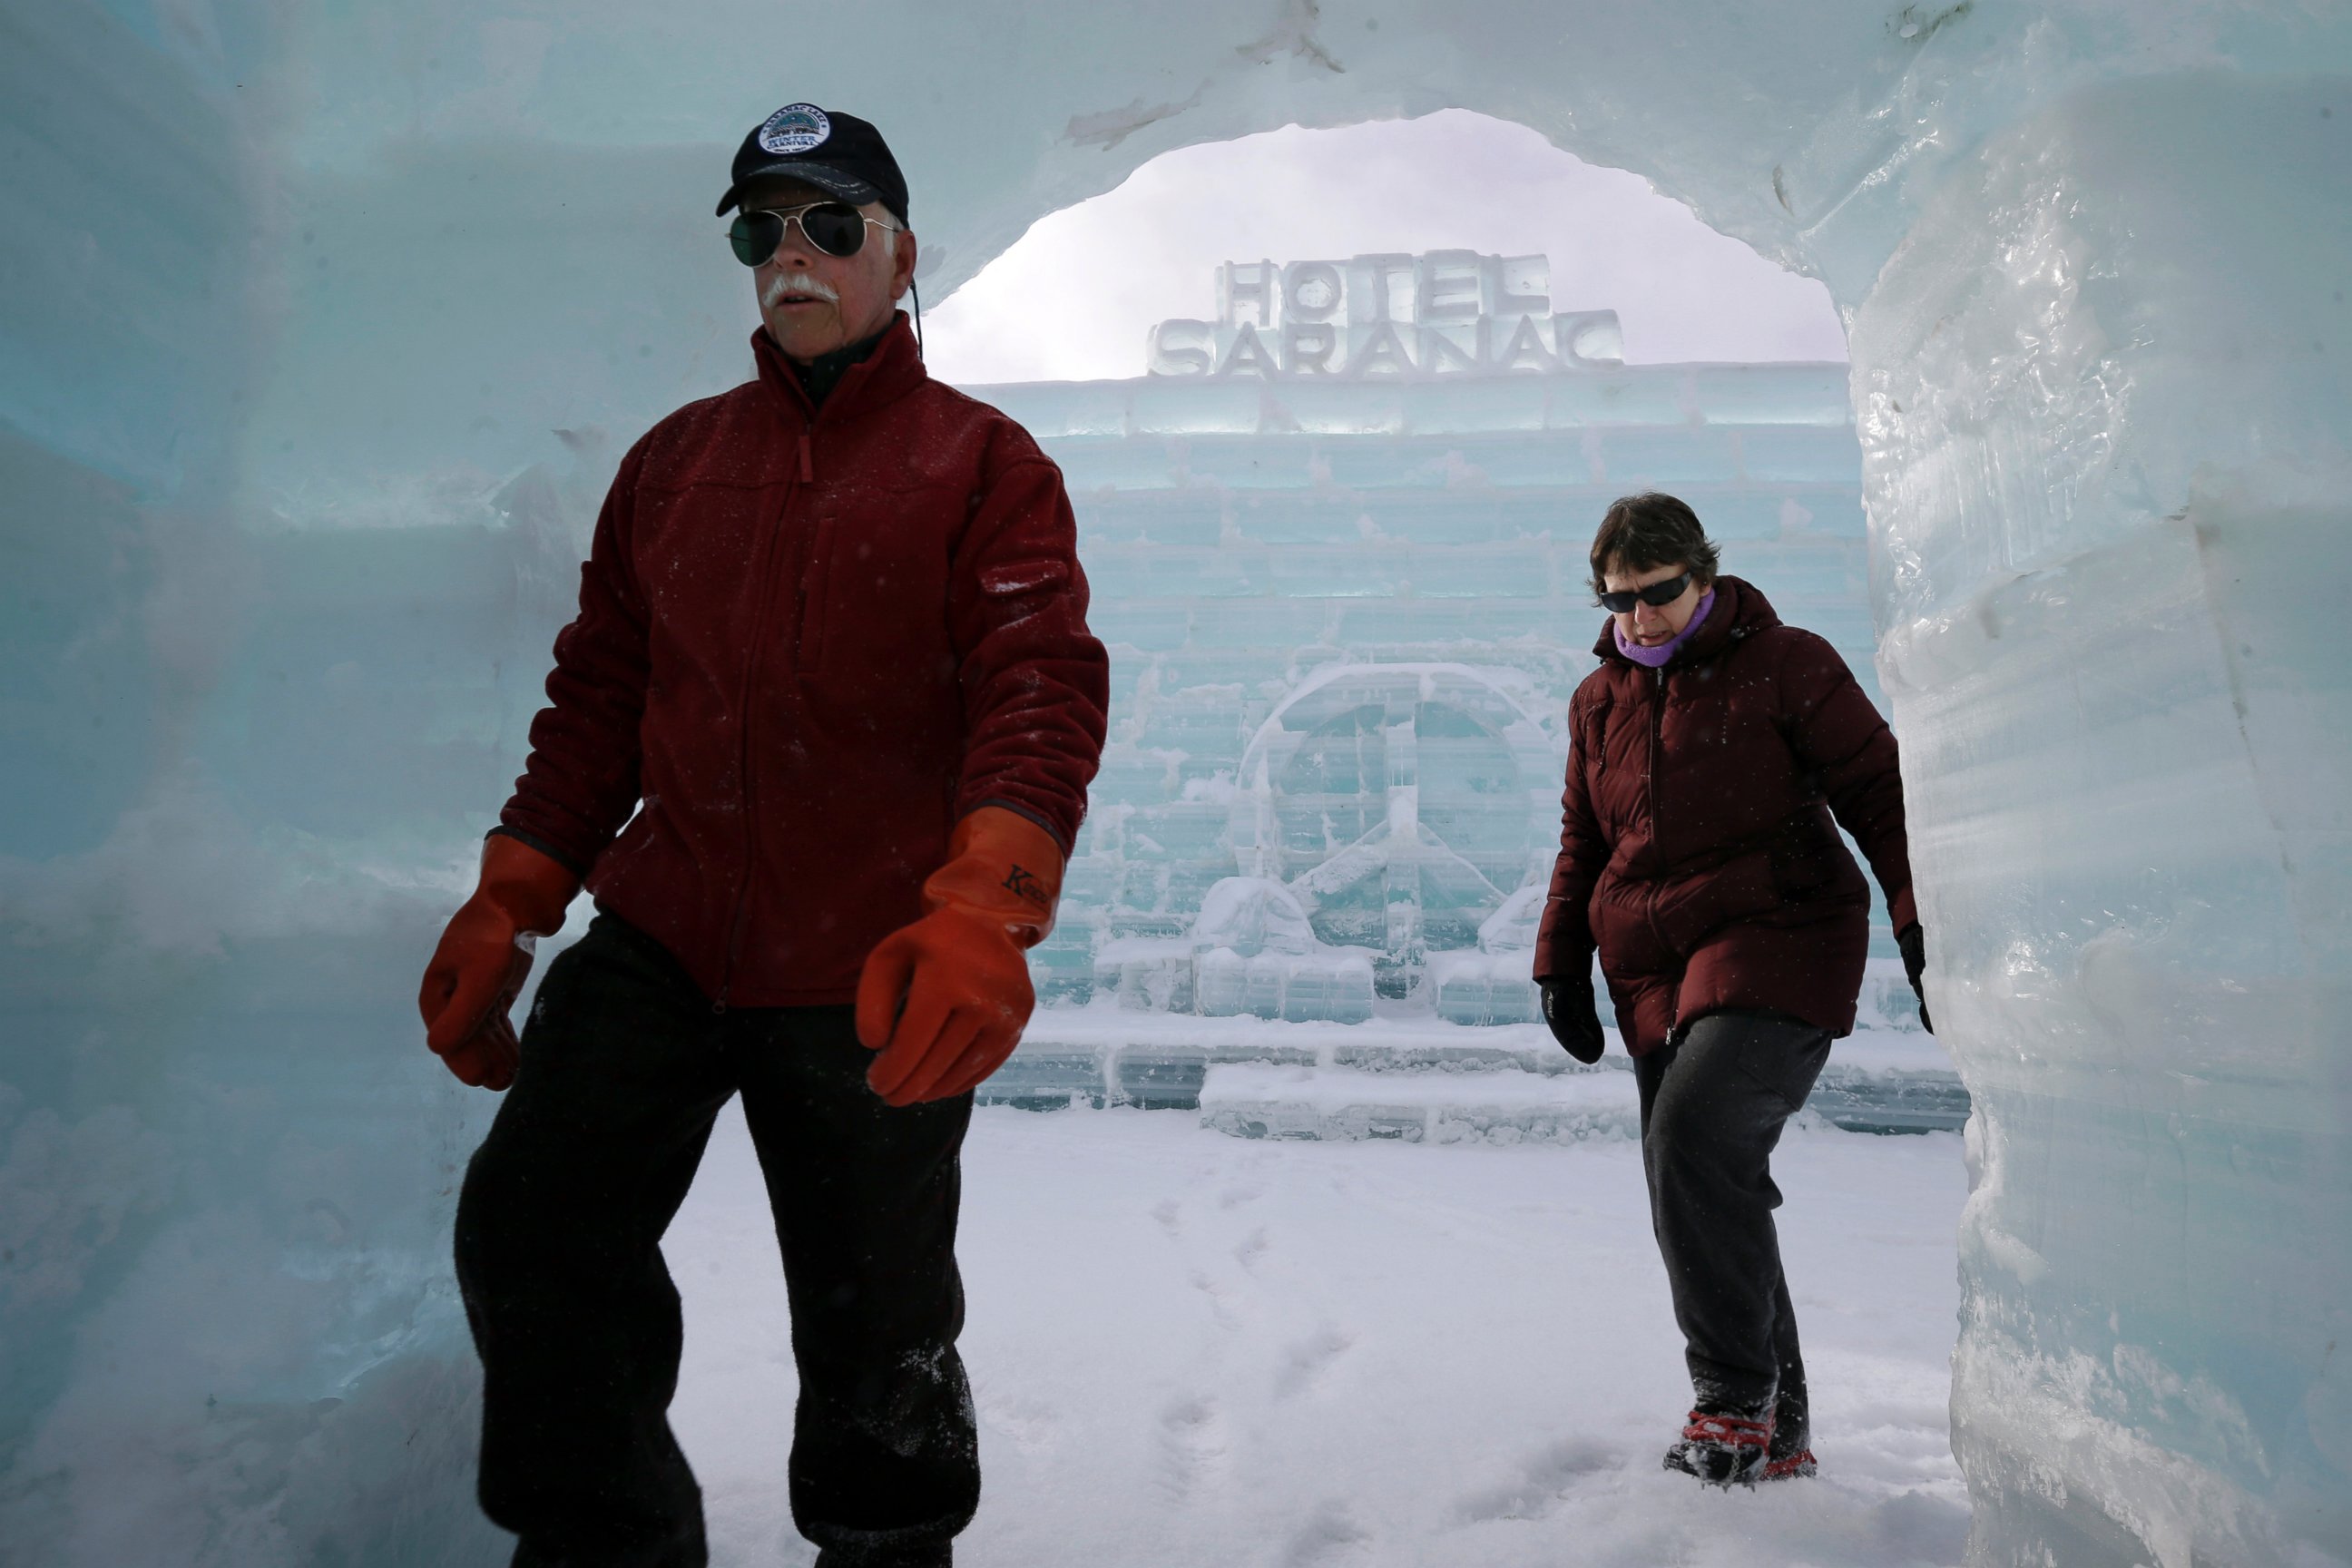 PHOTO: Dean Baker and his wife Marilynn Baker walk inside the Hotel Saranac ice palace